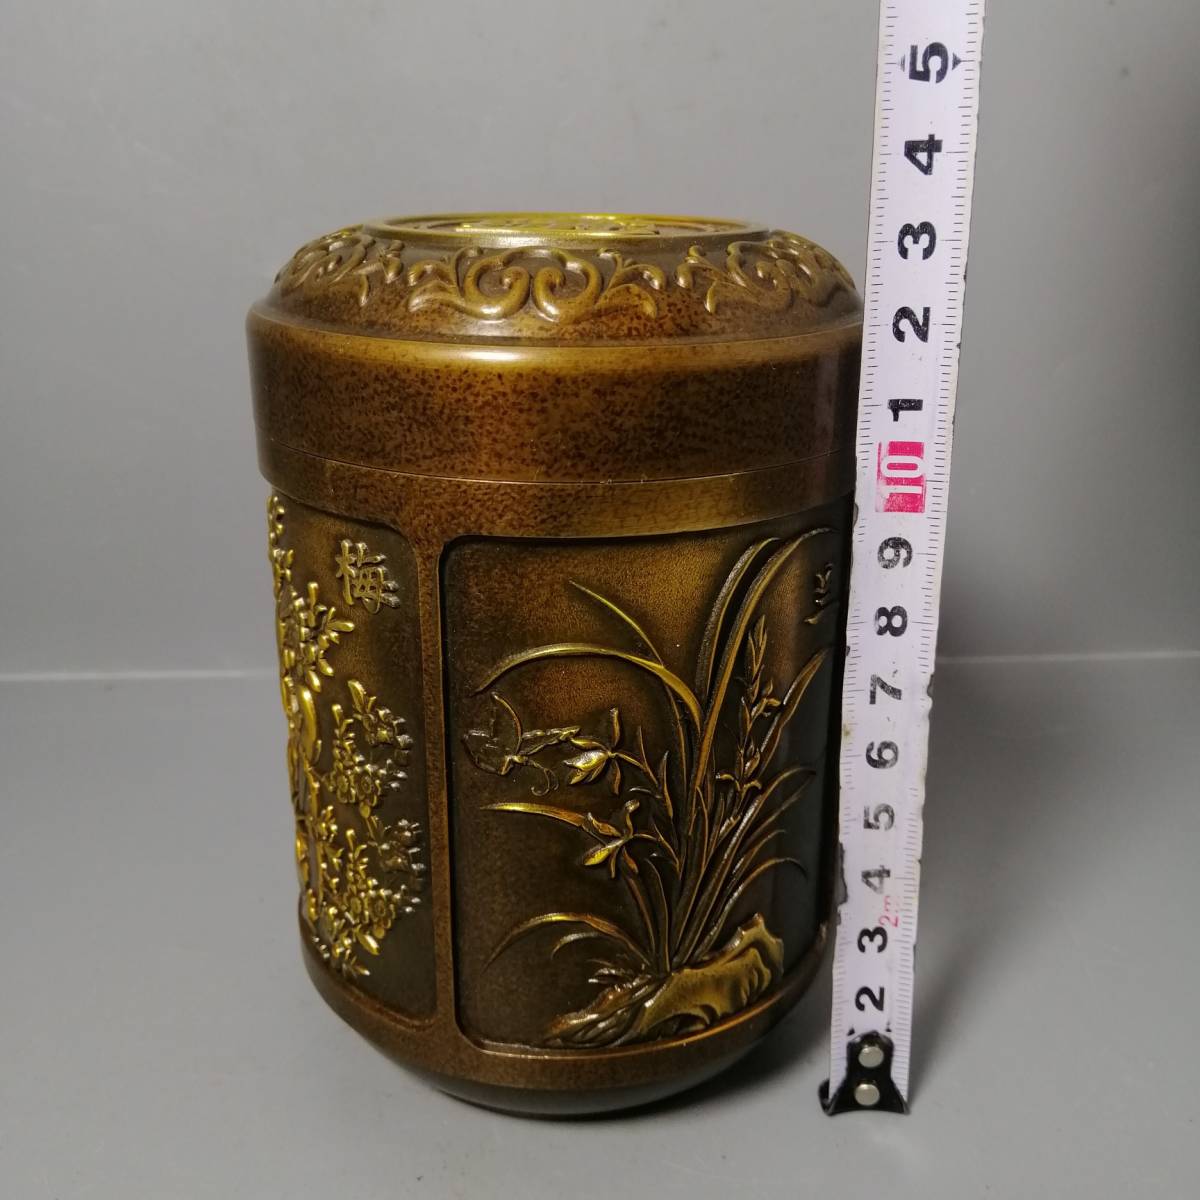 2~P2242 中国骨董品 銅制 極細工『骨董銅器の梅蘭竹菊茶壺です』 風水 